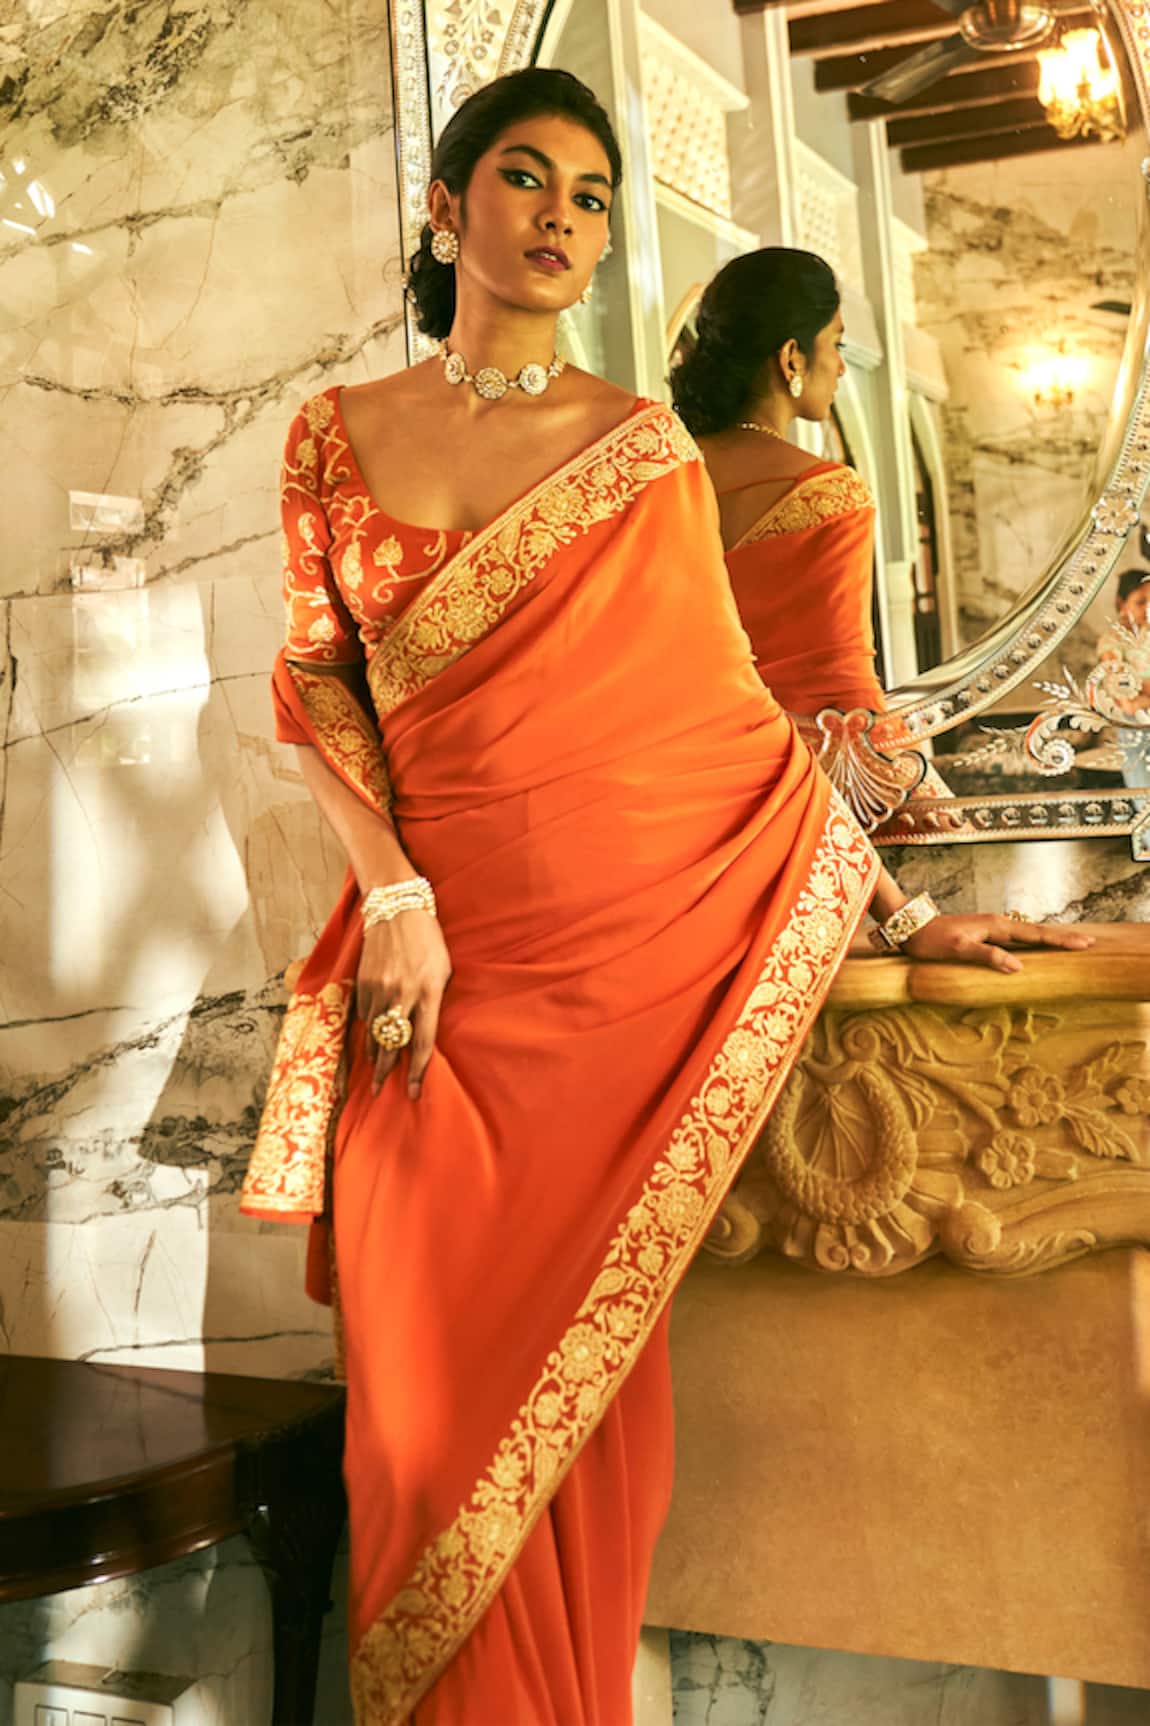 Discover more than 150 orange red saree